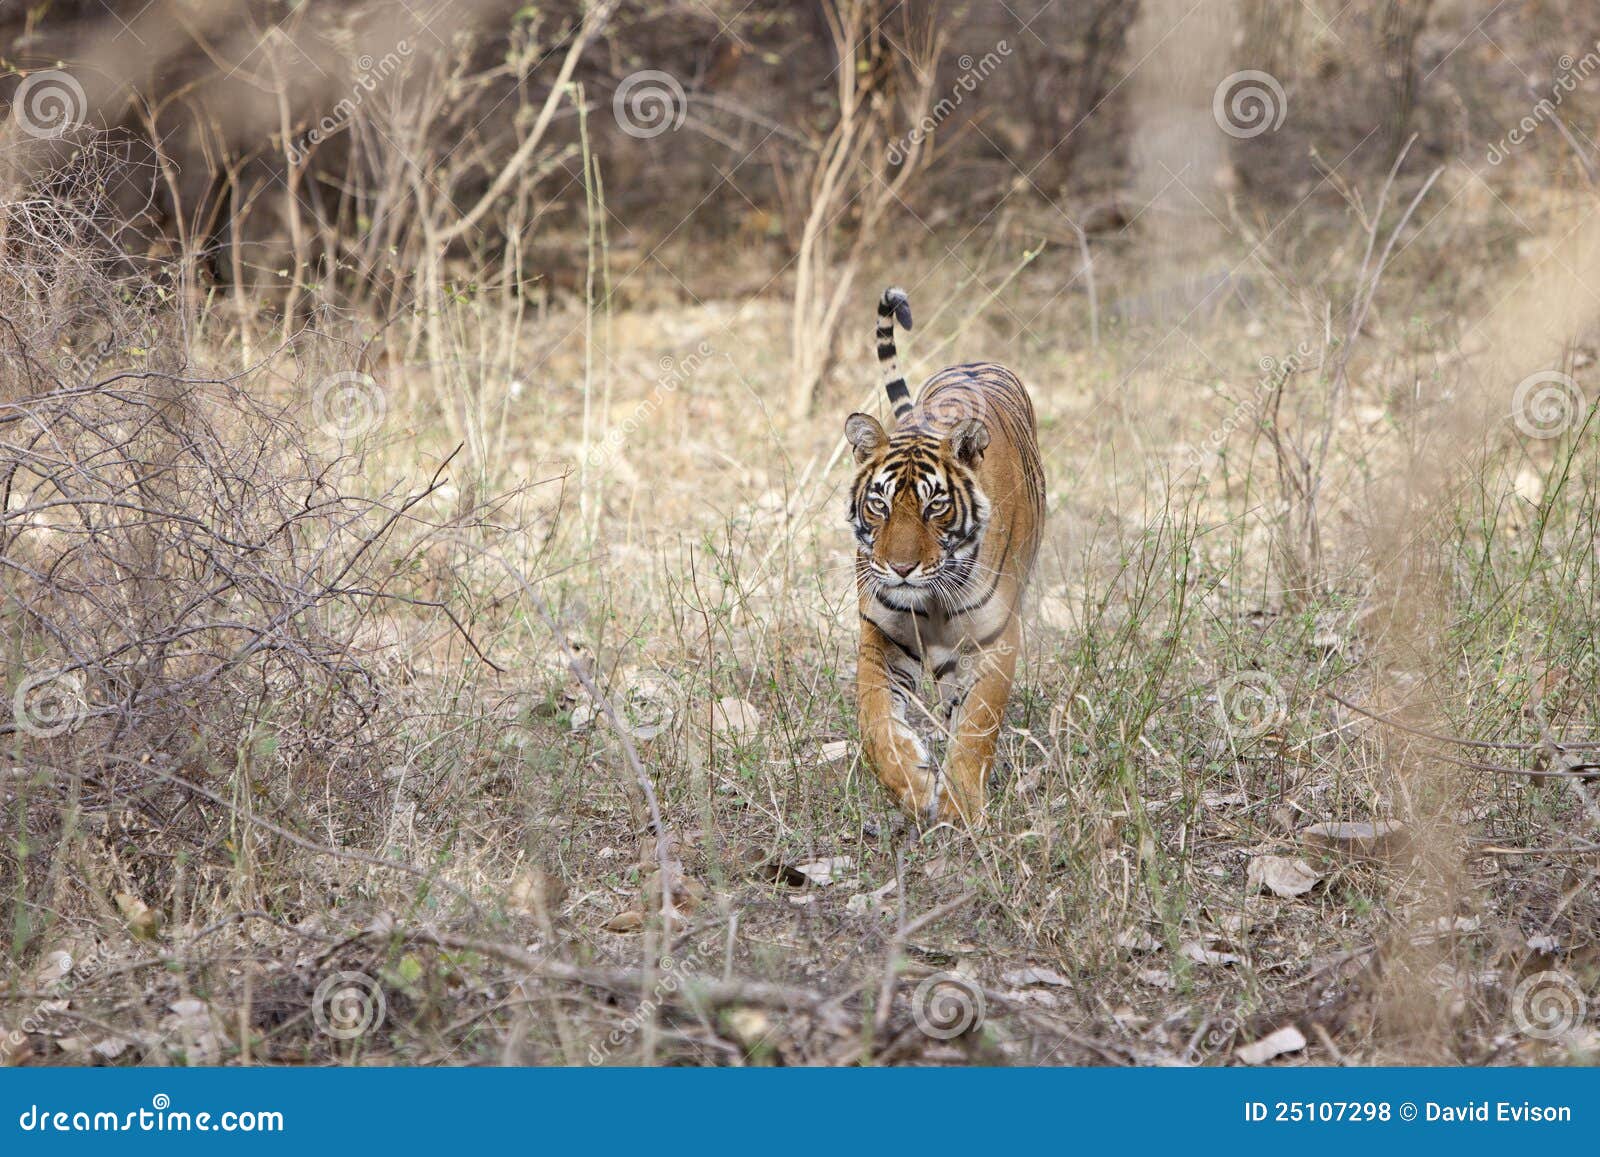 tigress walking through the jungle.